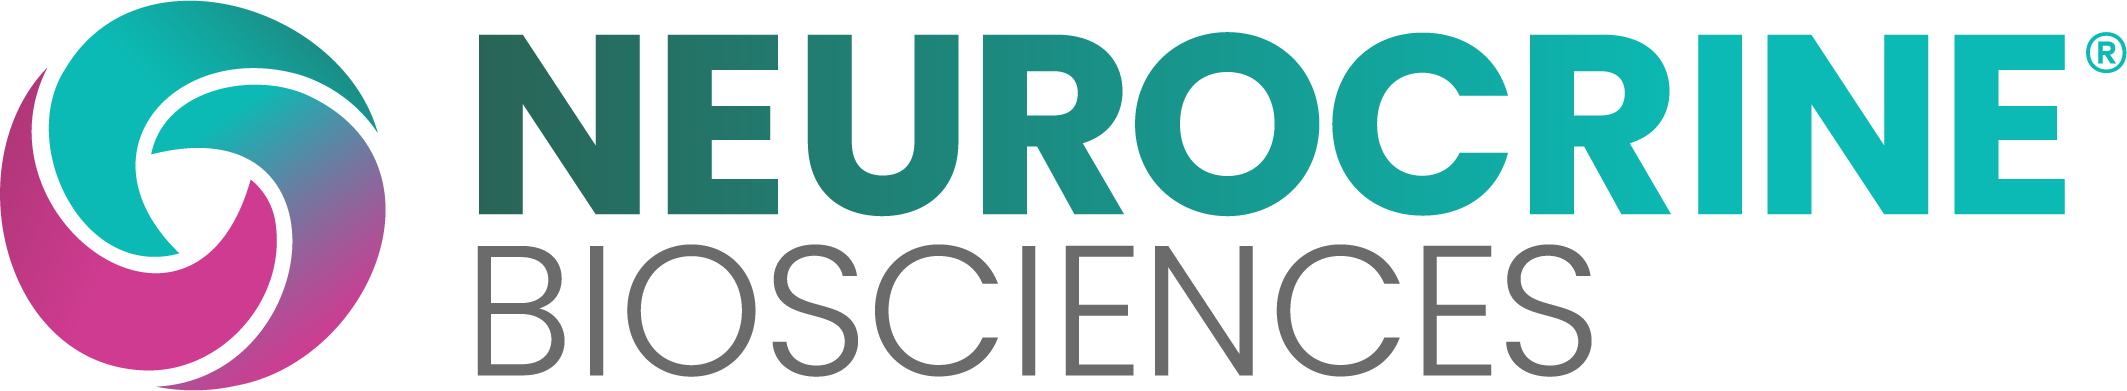 Executive IRC neurocrine logo 2021 notag rgb